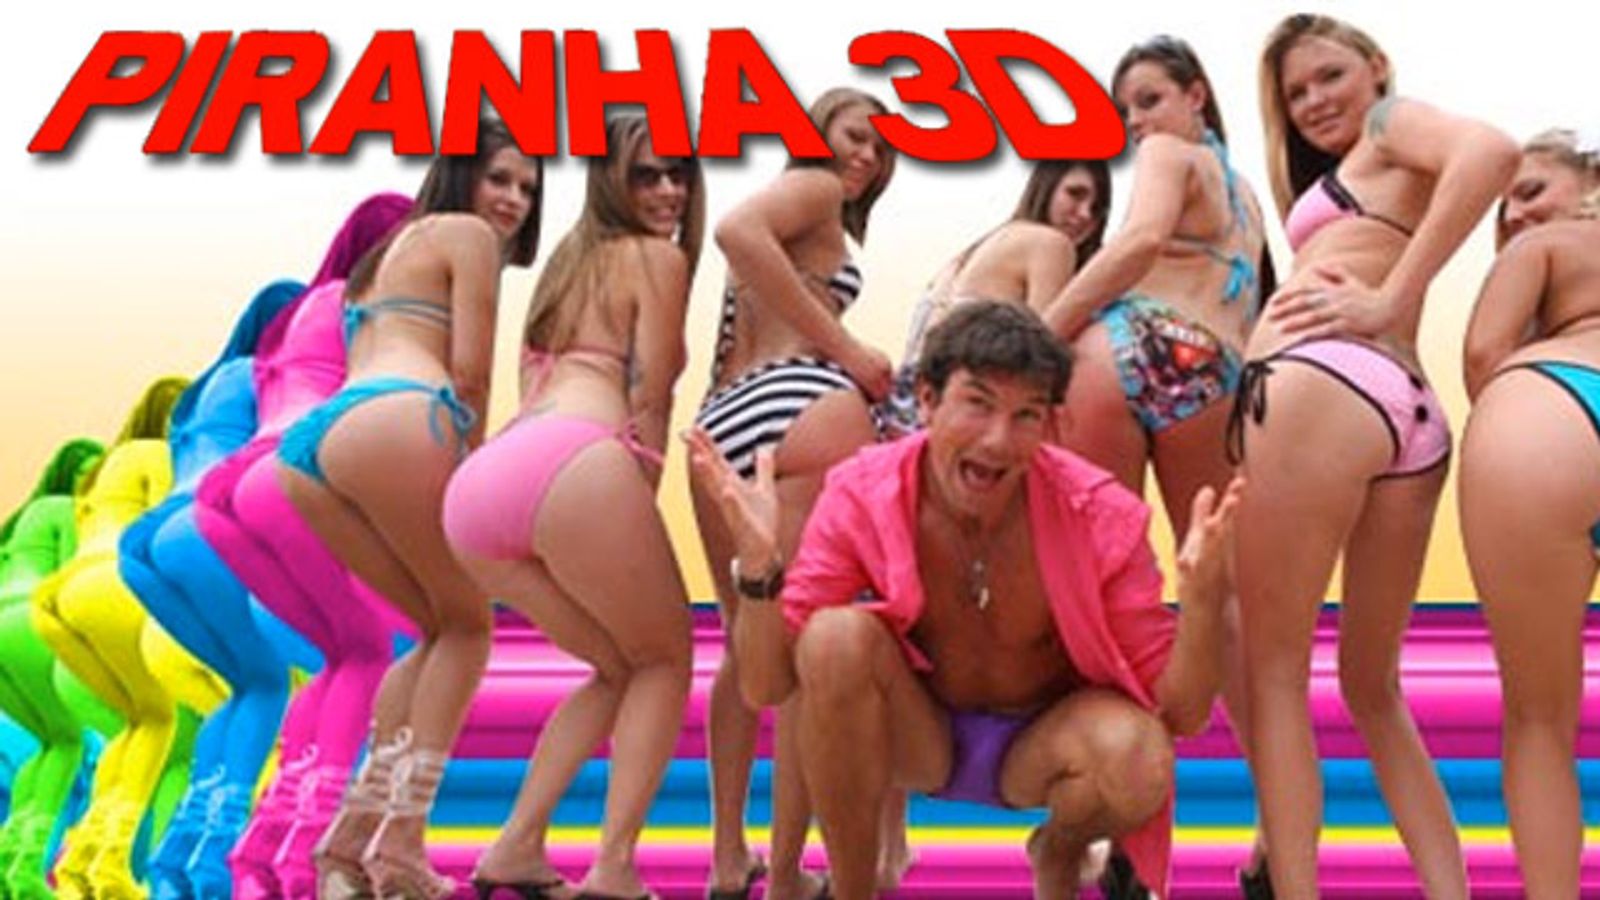 'Piranha 3D’ Opens Tomorrow...Not Starring Joe Francis